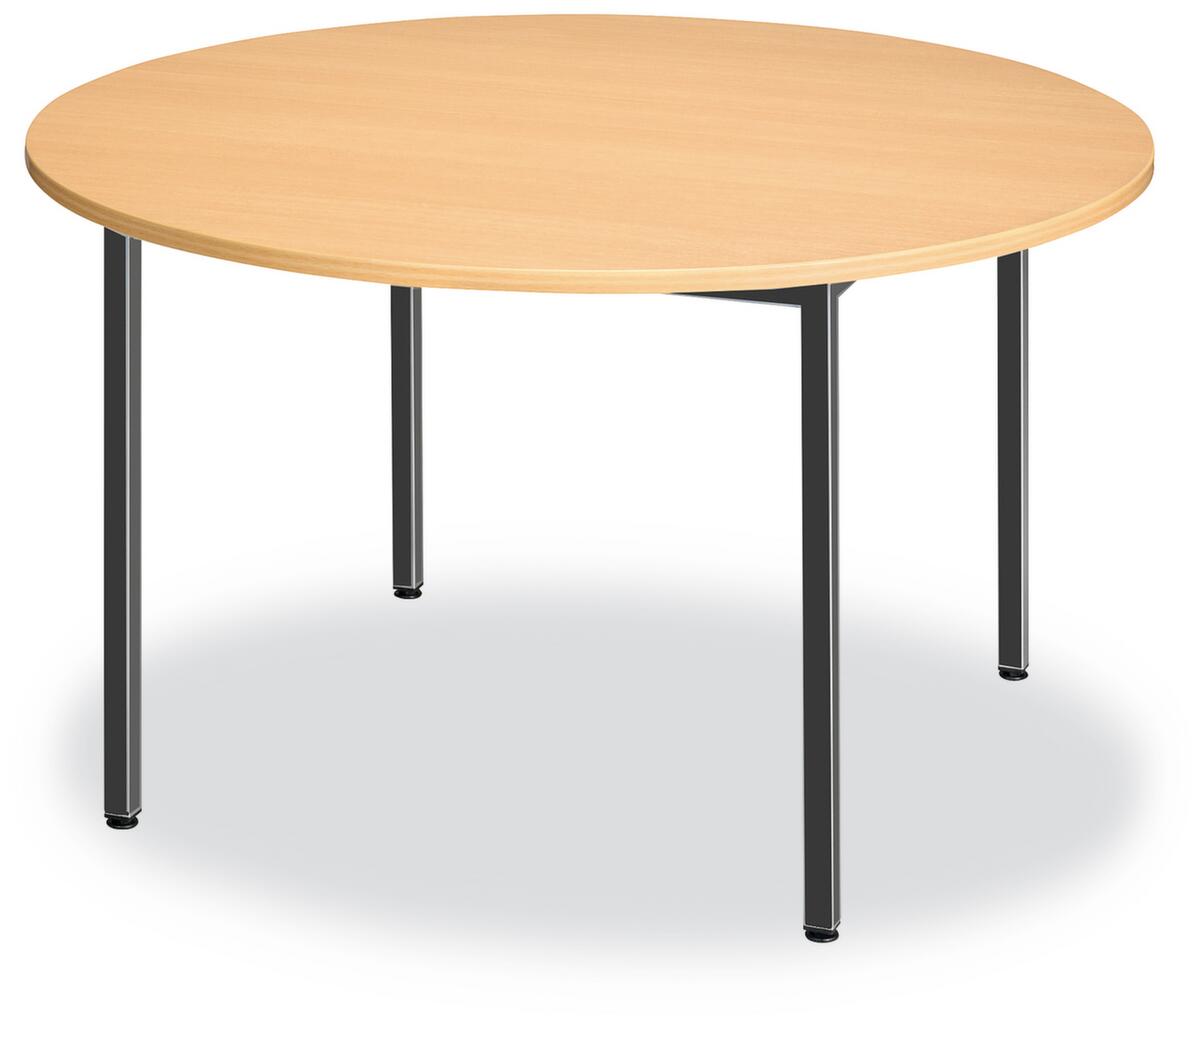 Rechthoekige multifunctionele tafel met frame van vierkante buis  ZOOM